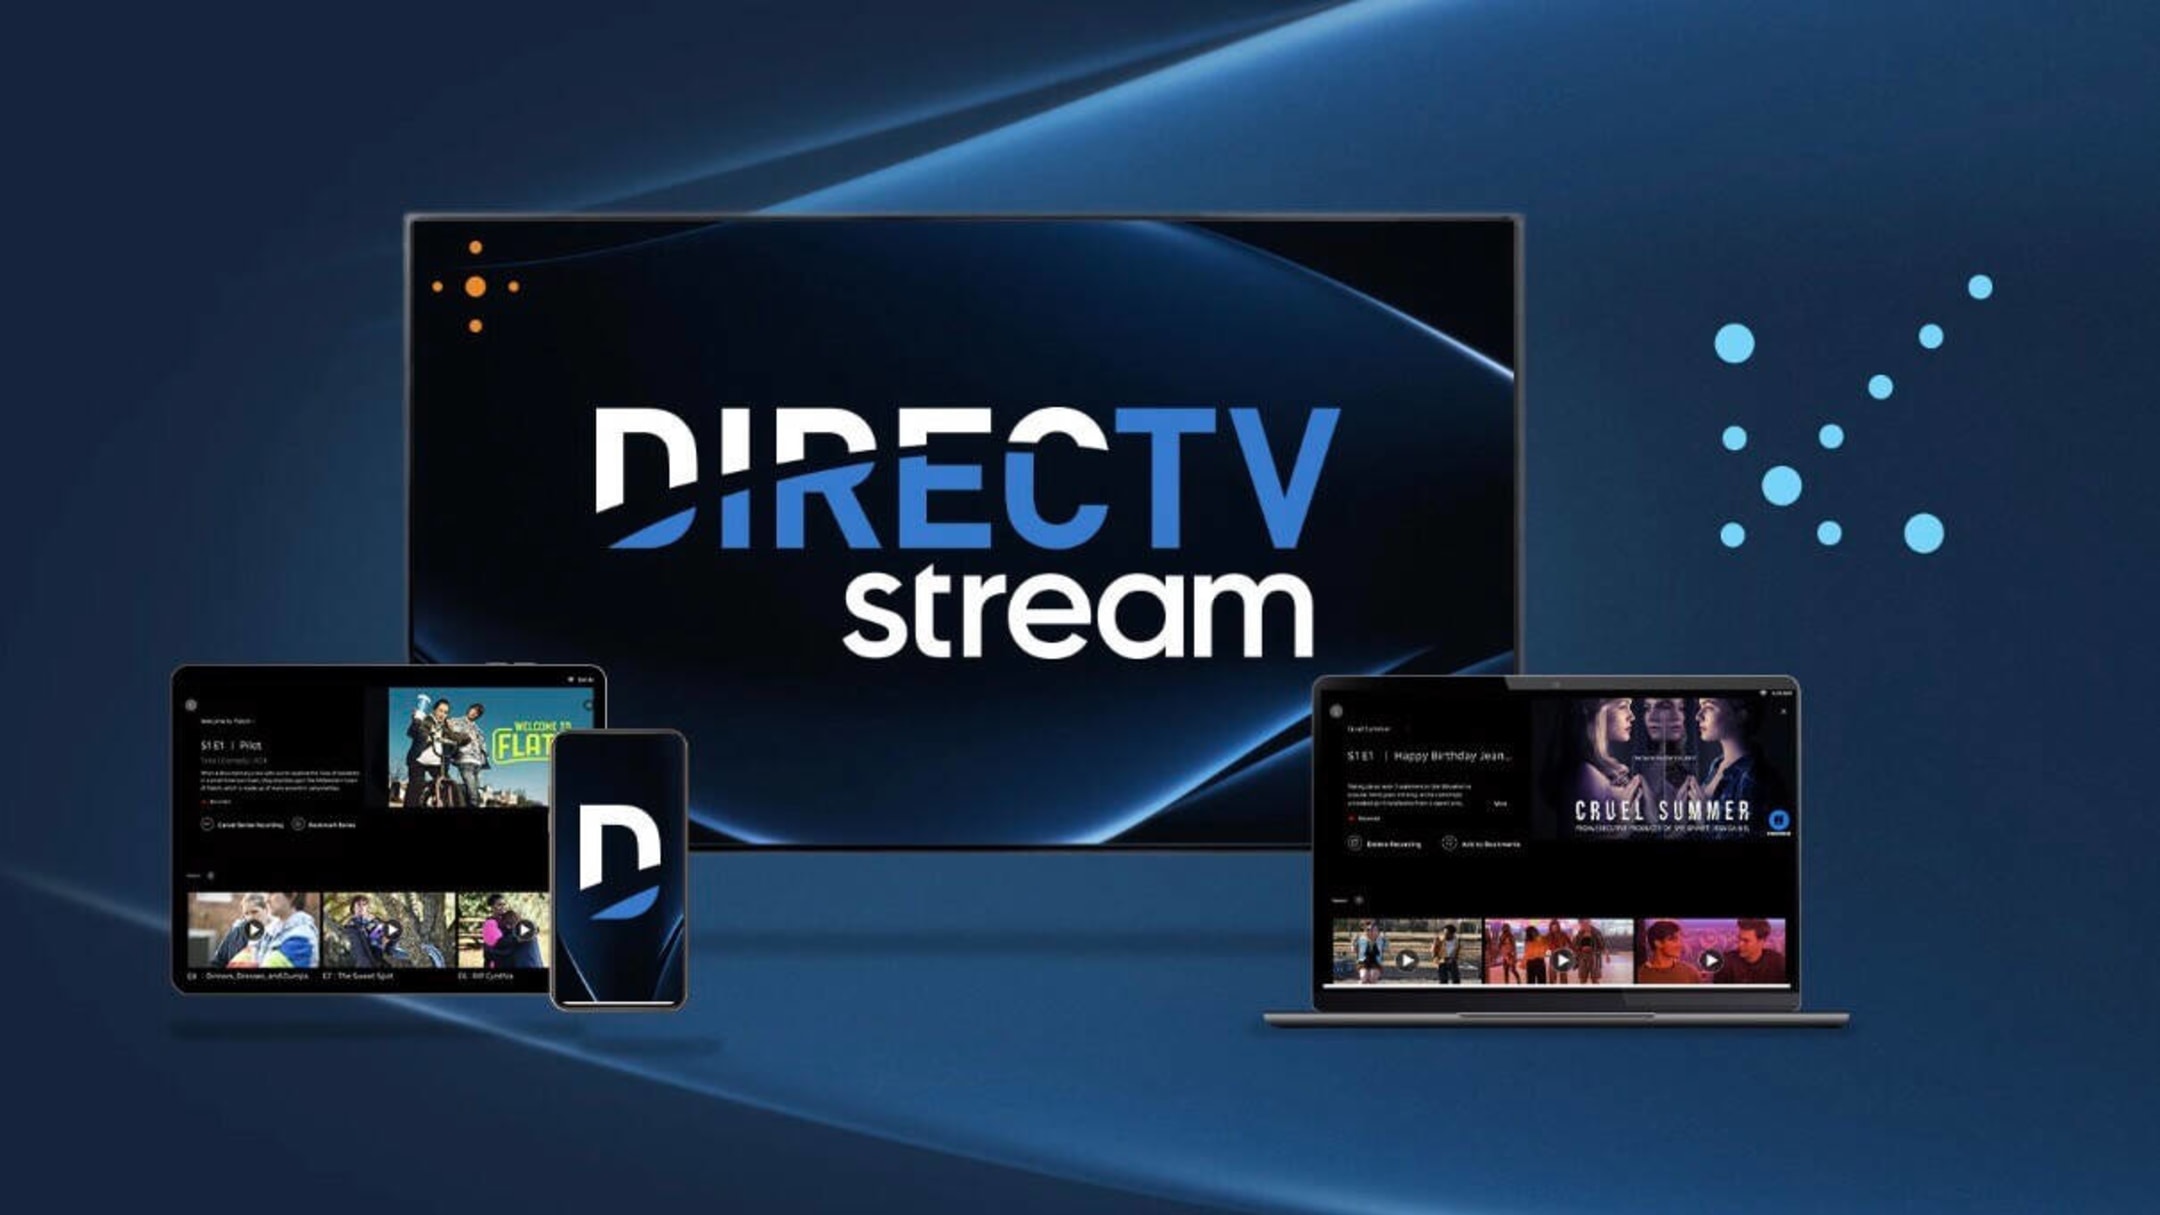 nfl package on directv stream